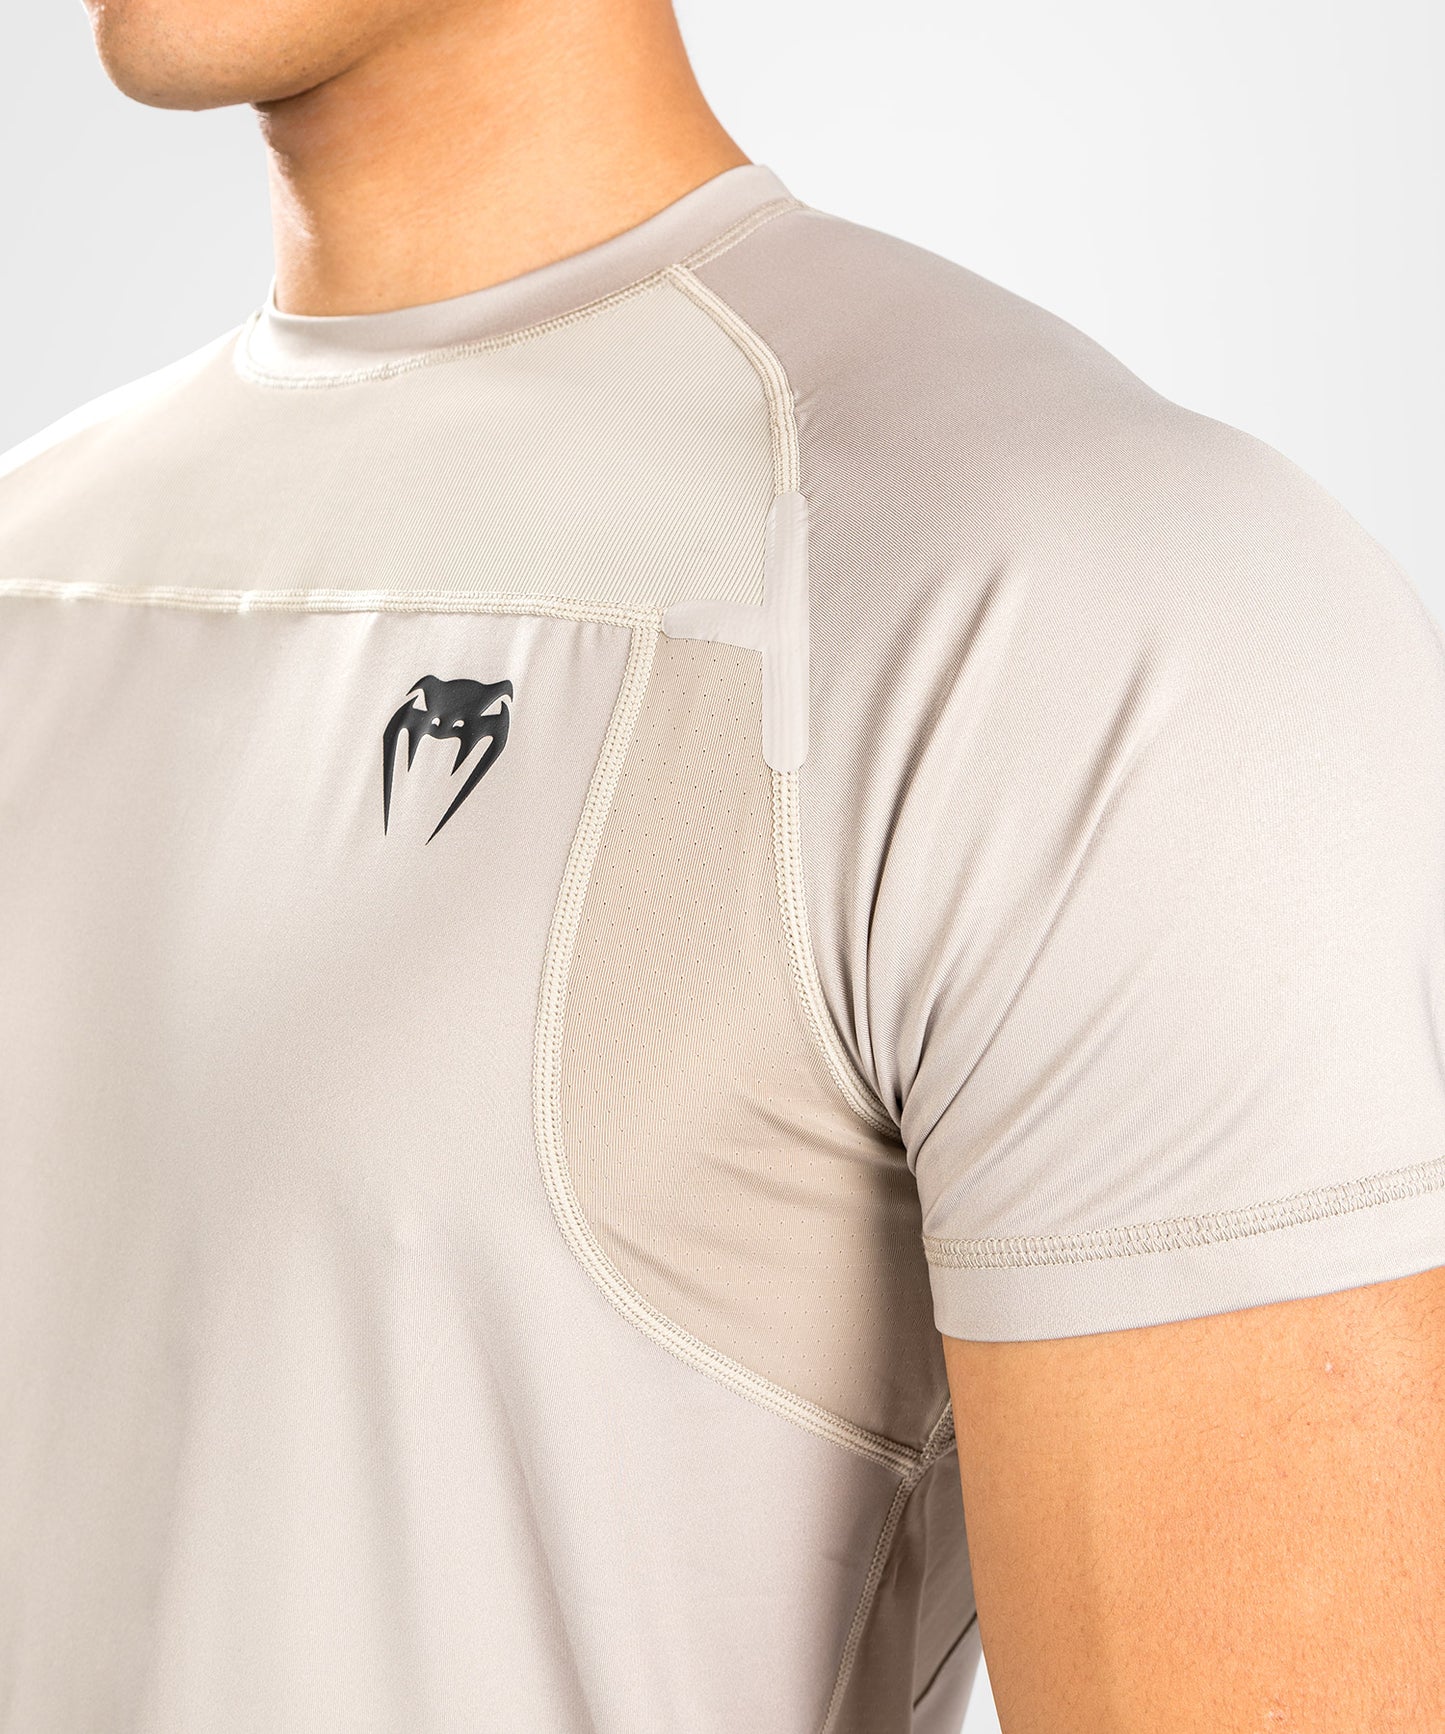 Venum G-Fit Air Dry Tech T-shirt - Zand